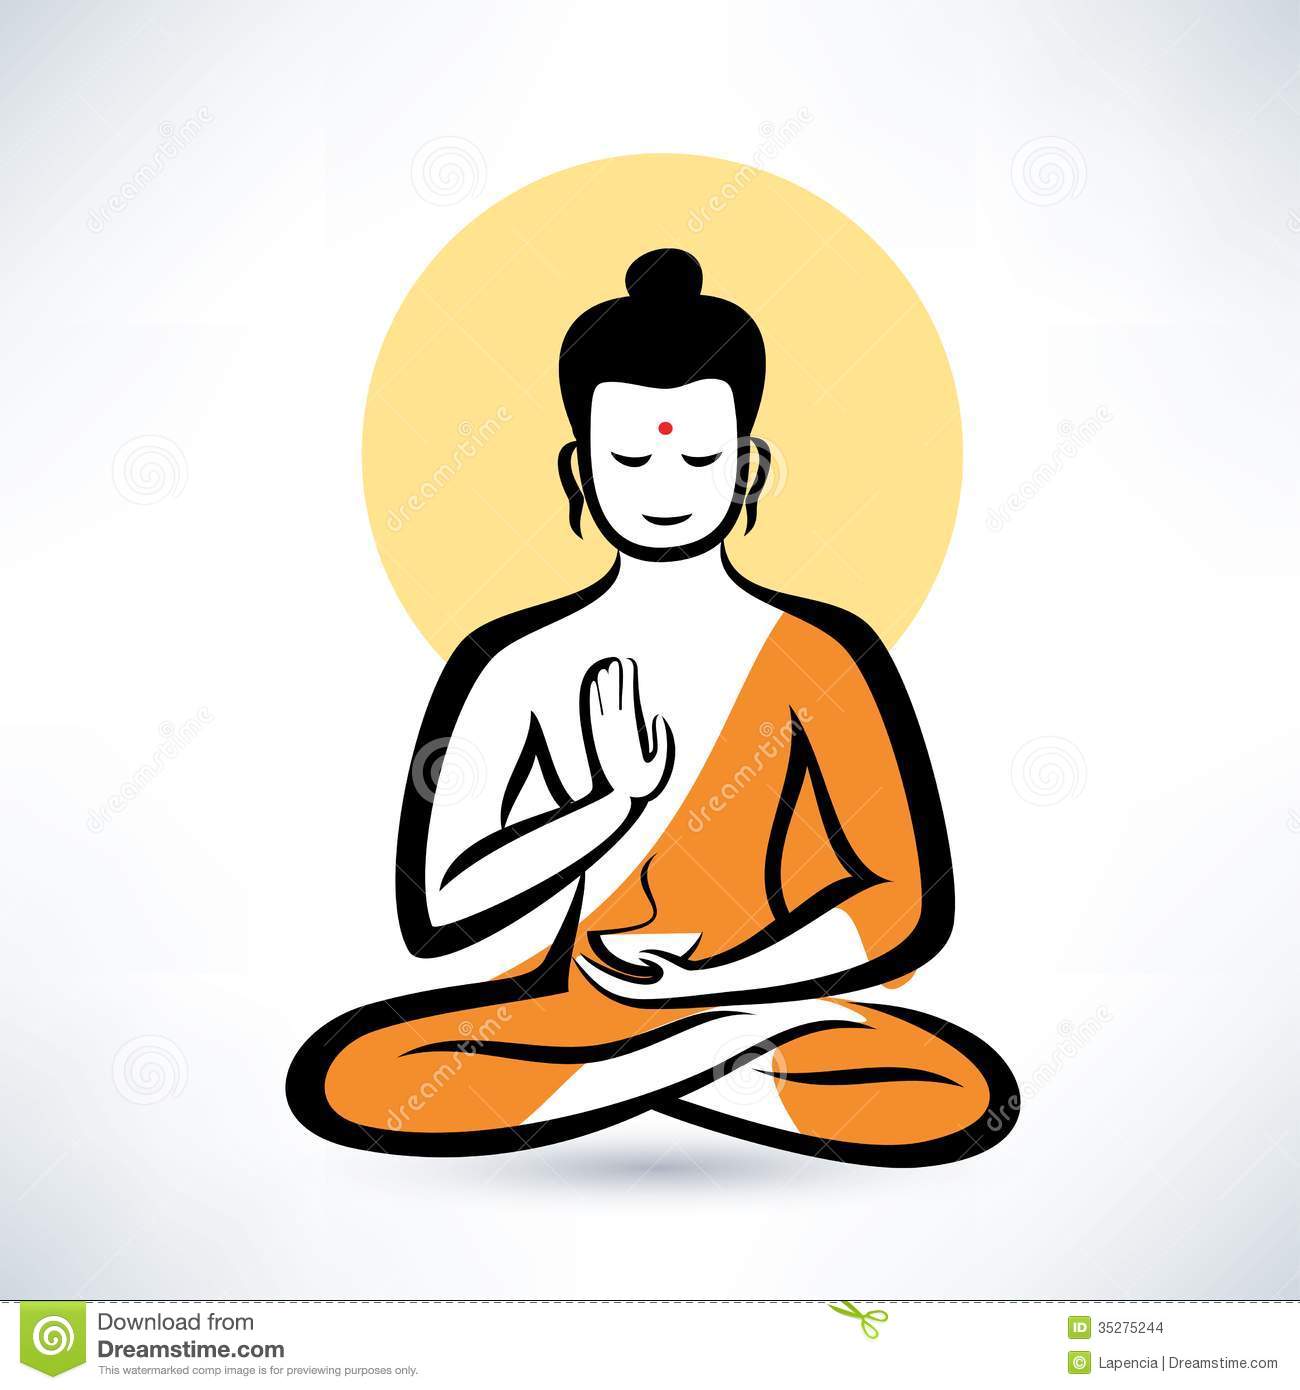 Buddha clipart meditation.